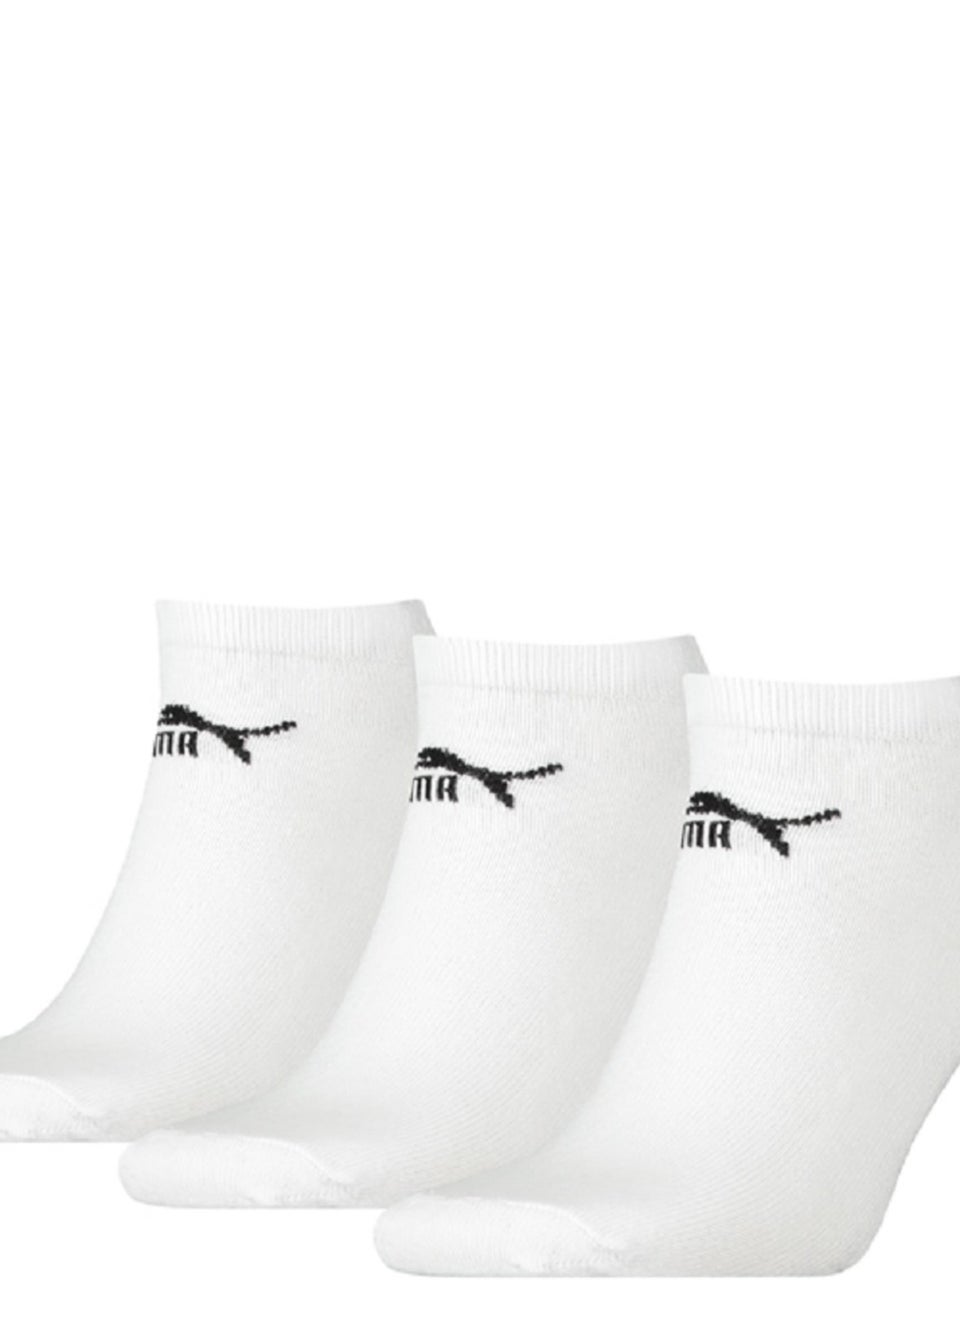 Puma White Trainer Socks (Pack of 3)